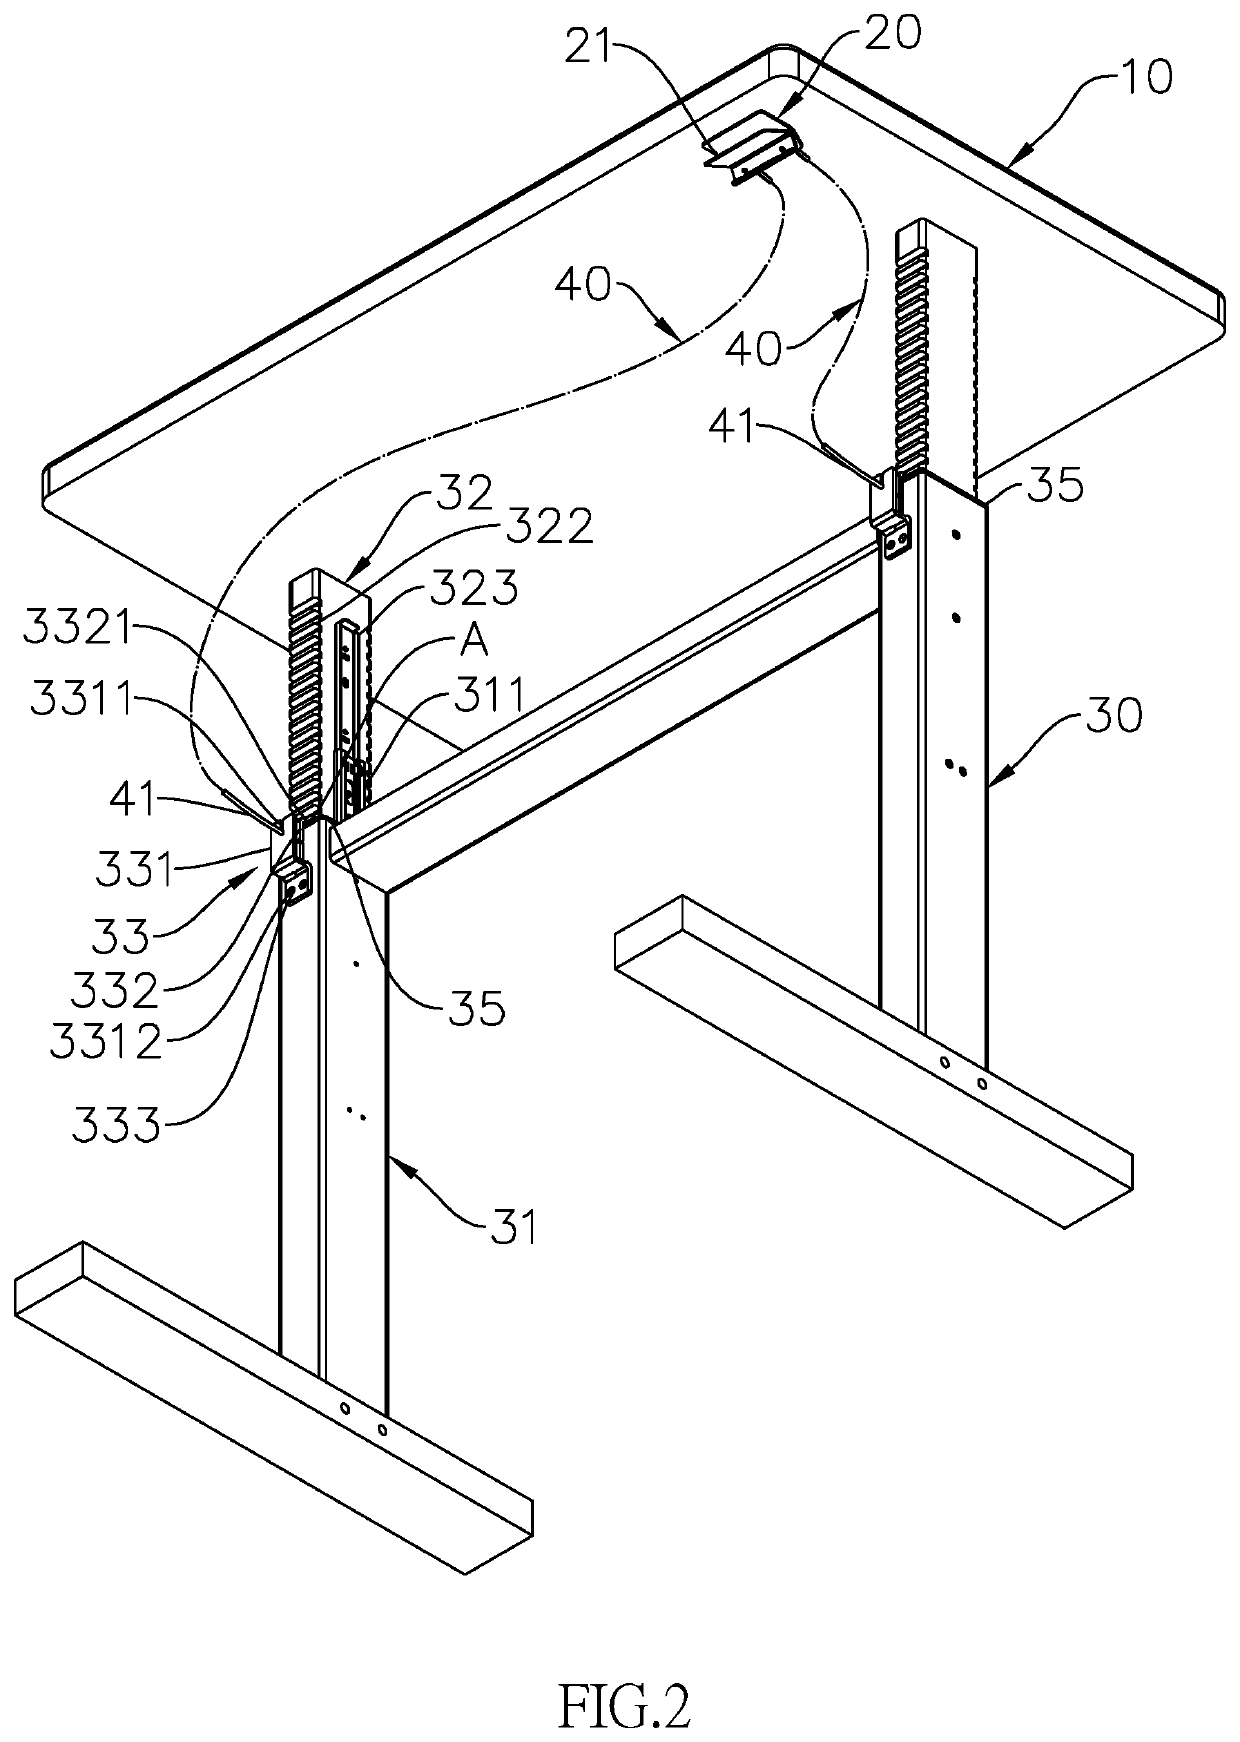 Height-adjustable table